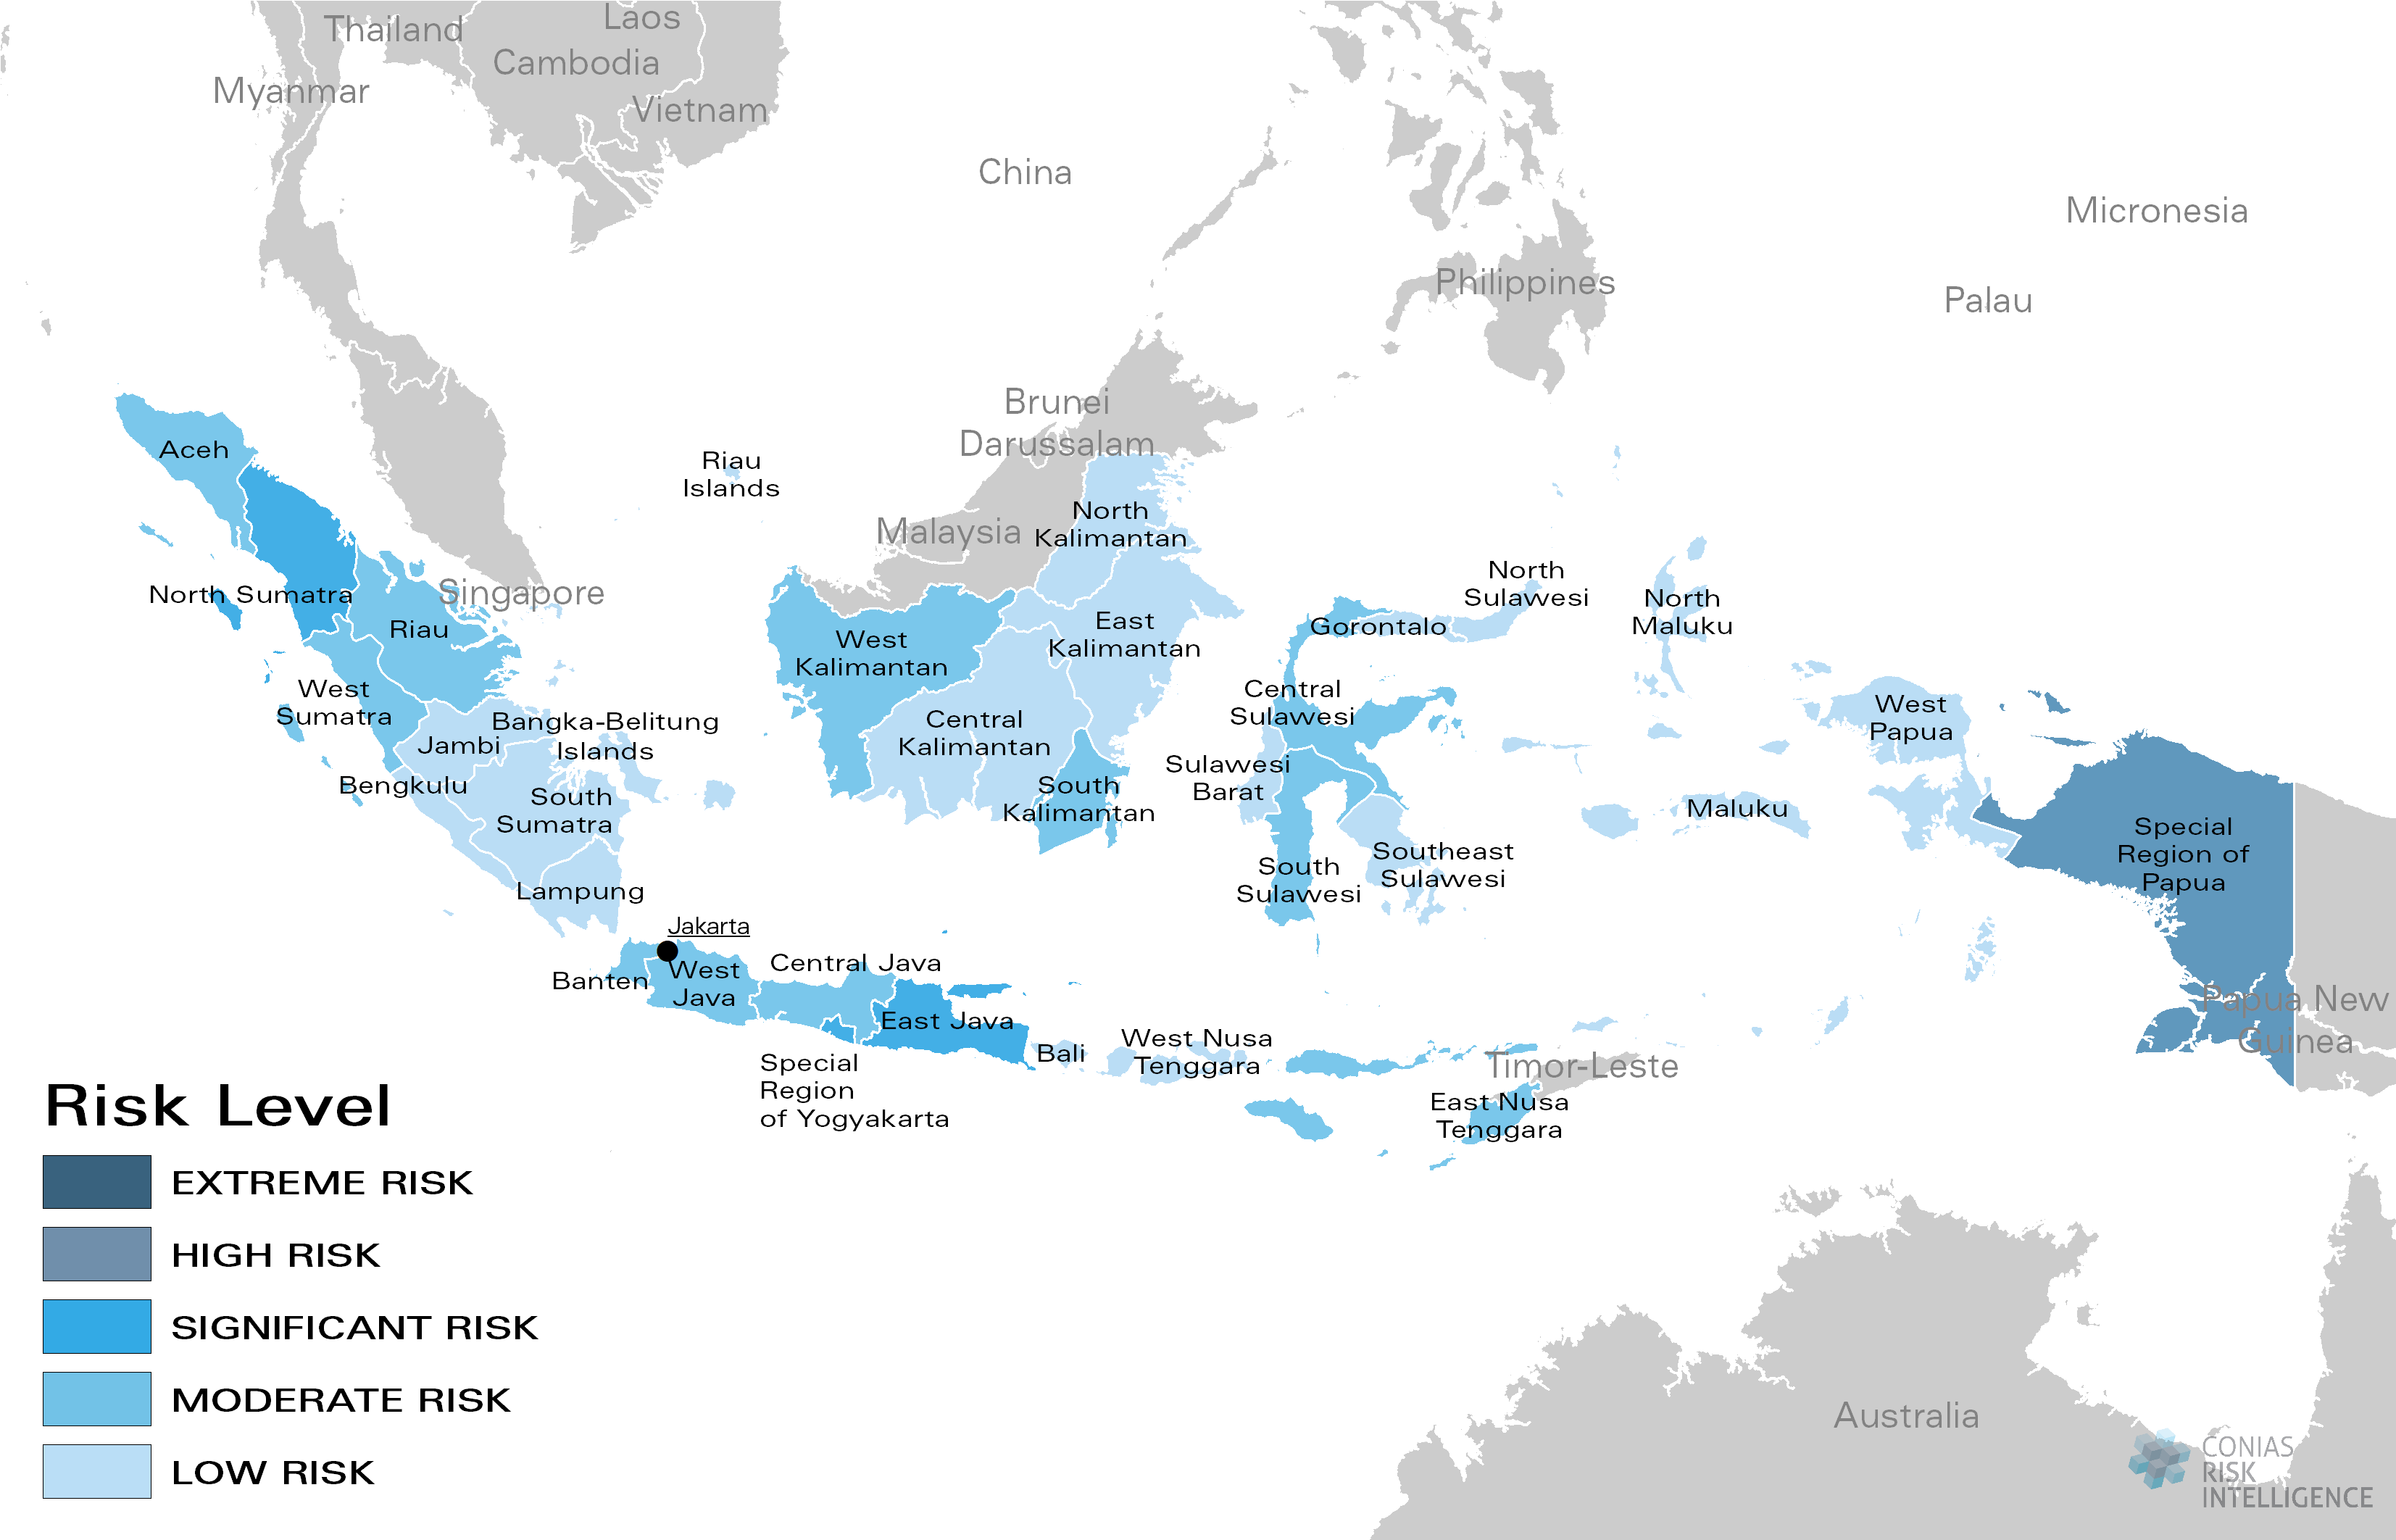 CONIAS Political Risk Map Indonesia